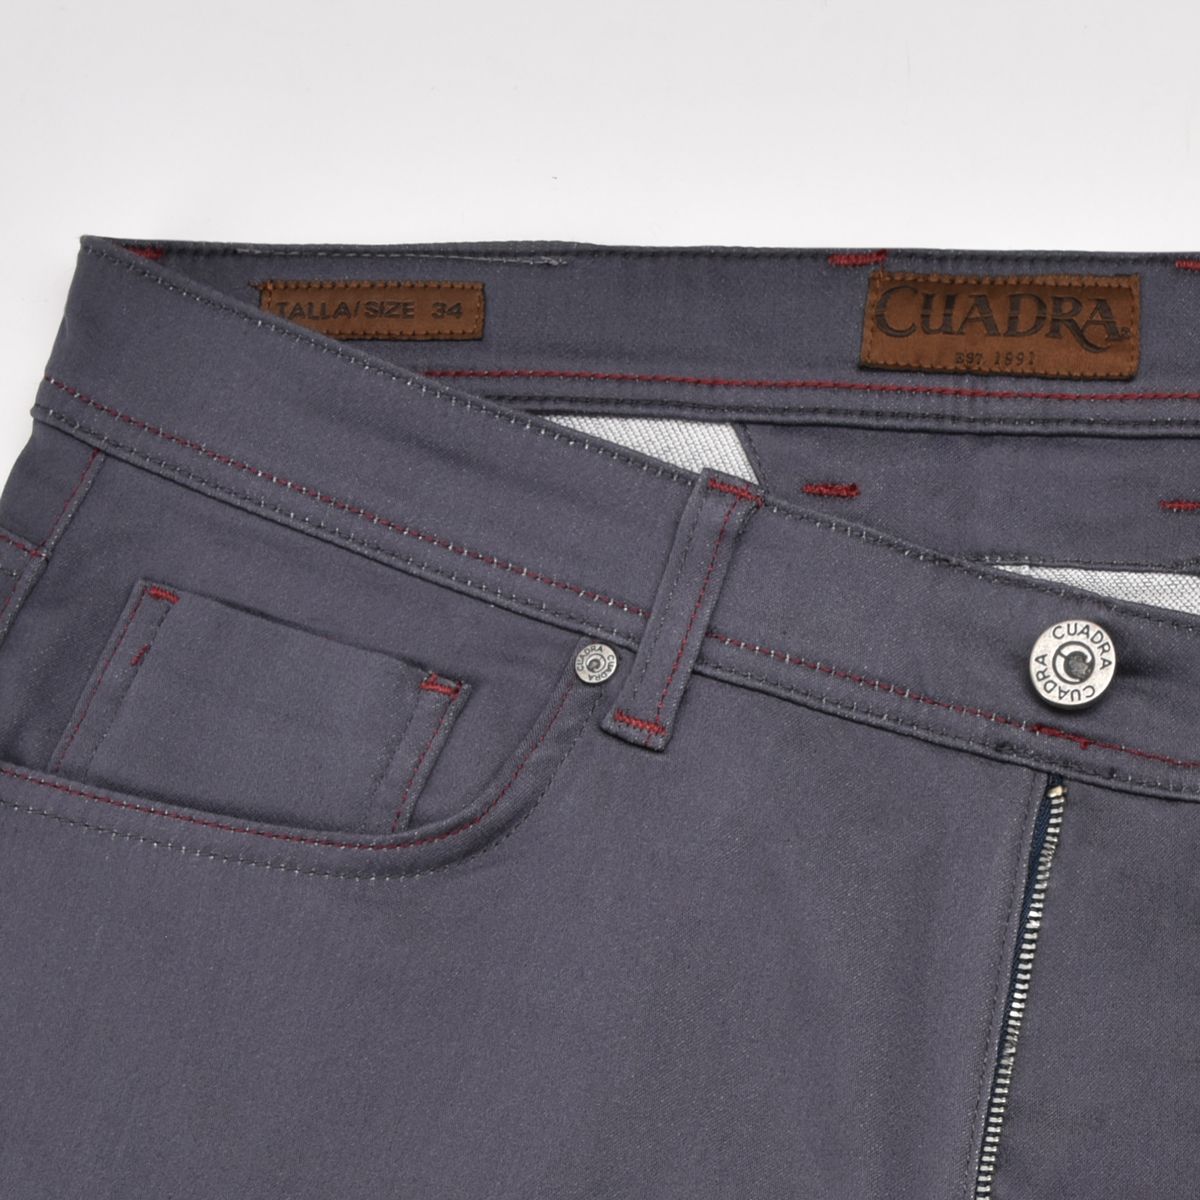 JN1LP23 - Cuadra slate grey ultimate comfort stretch denim jeans for men-Kuet.us